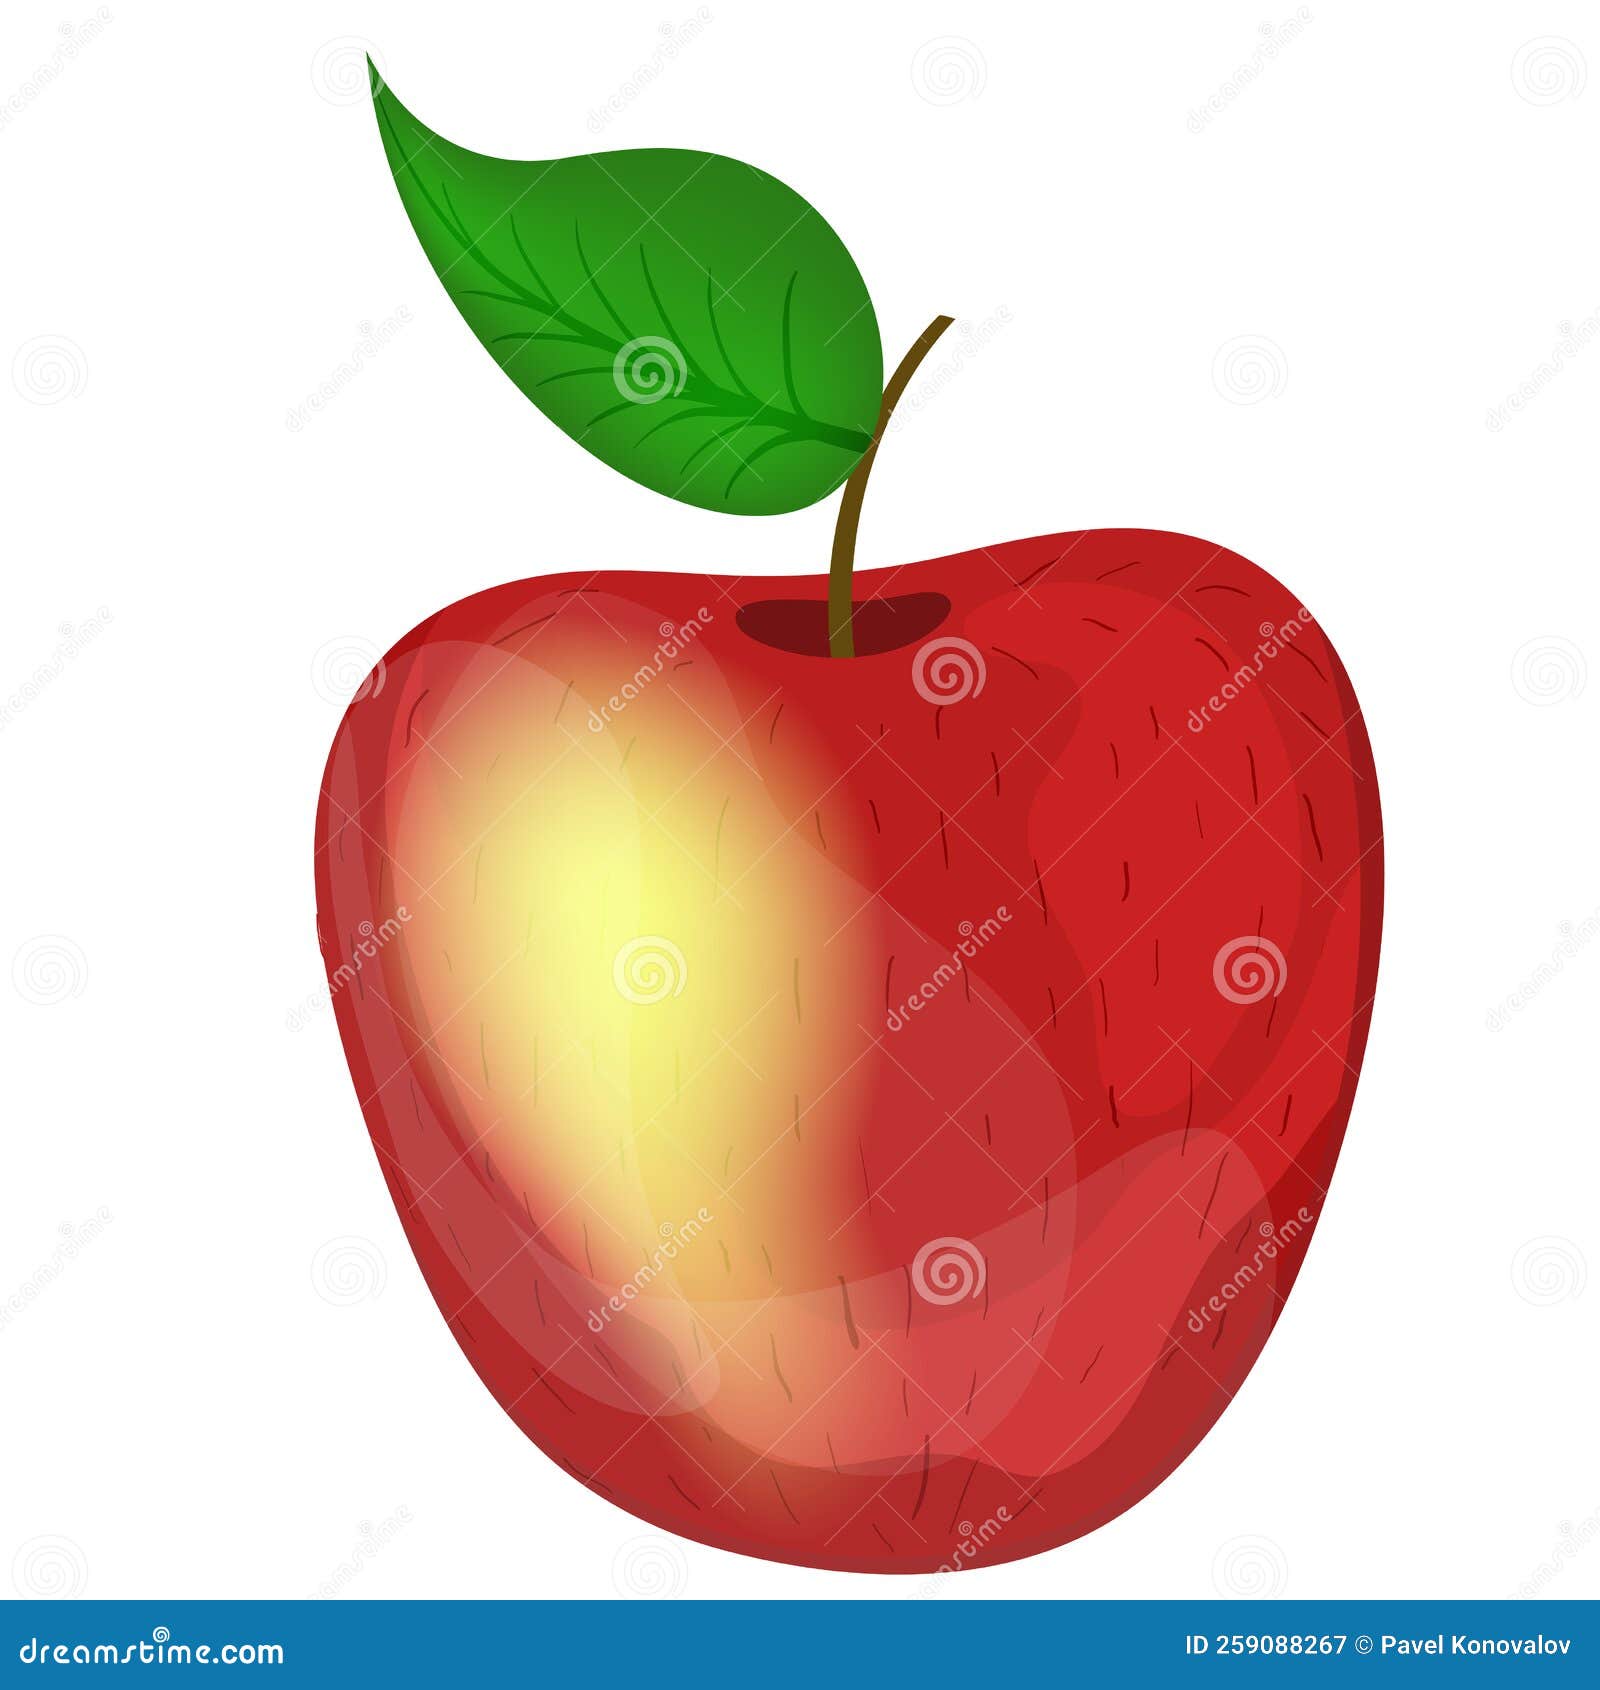 Realistic Apple stock illustration. Illustration of purity - 259088267